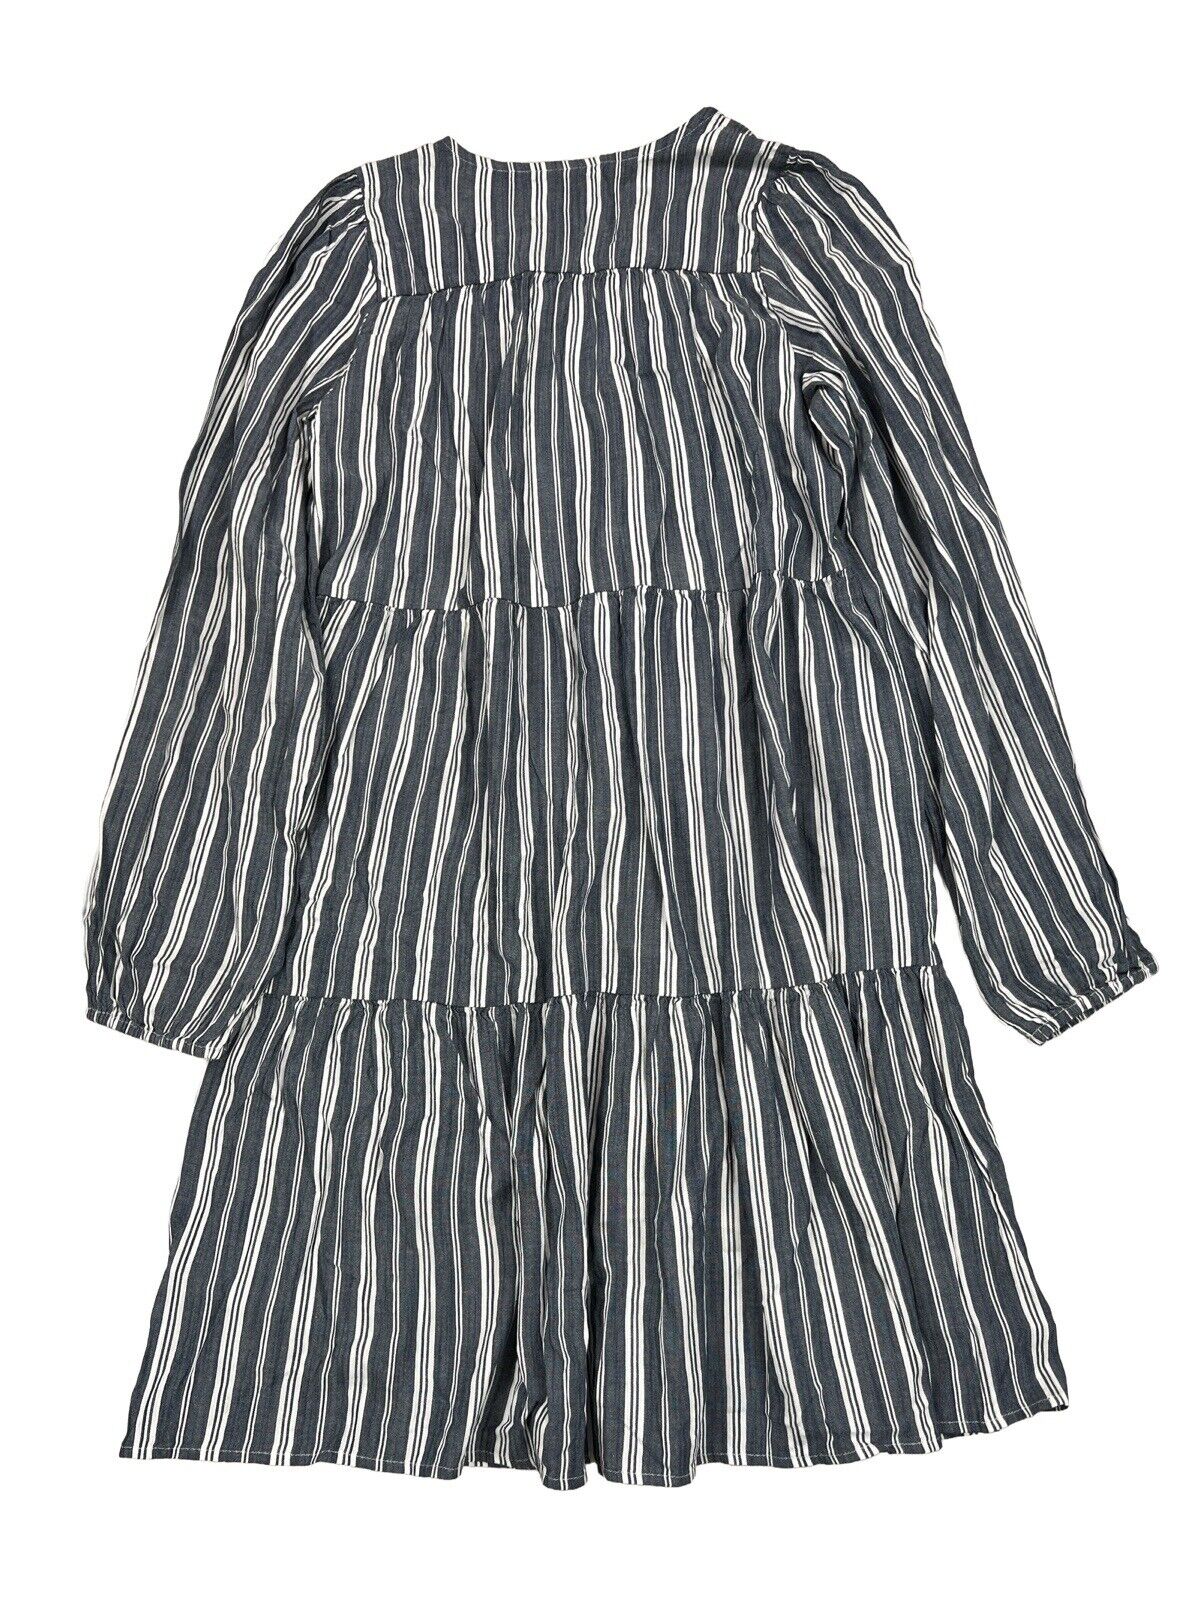 NEW Old Navy Women's Blue Striped Boho Style Long Sleeve Dress - M Tall